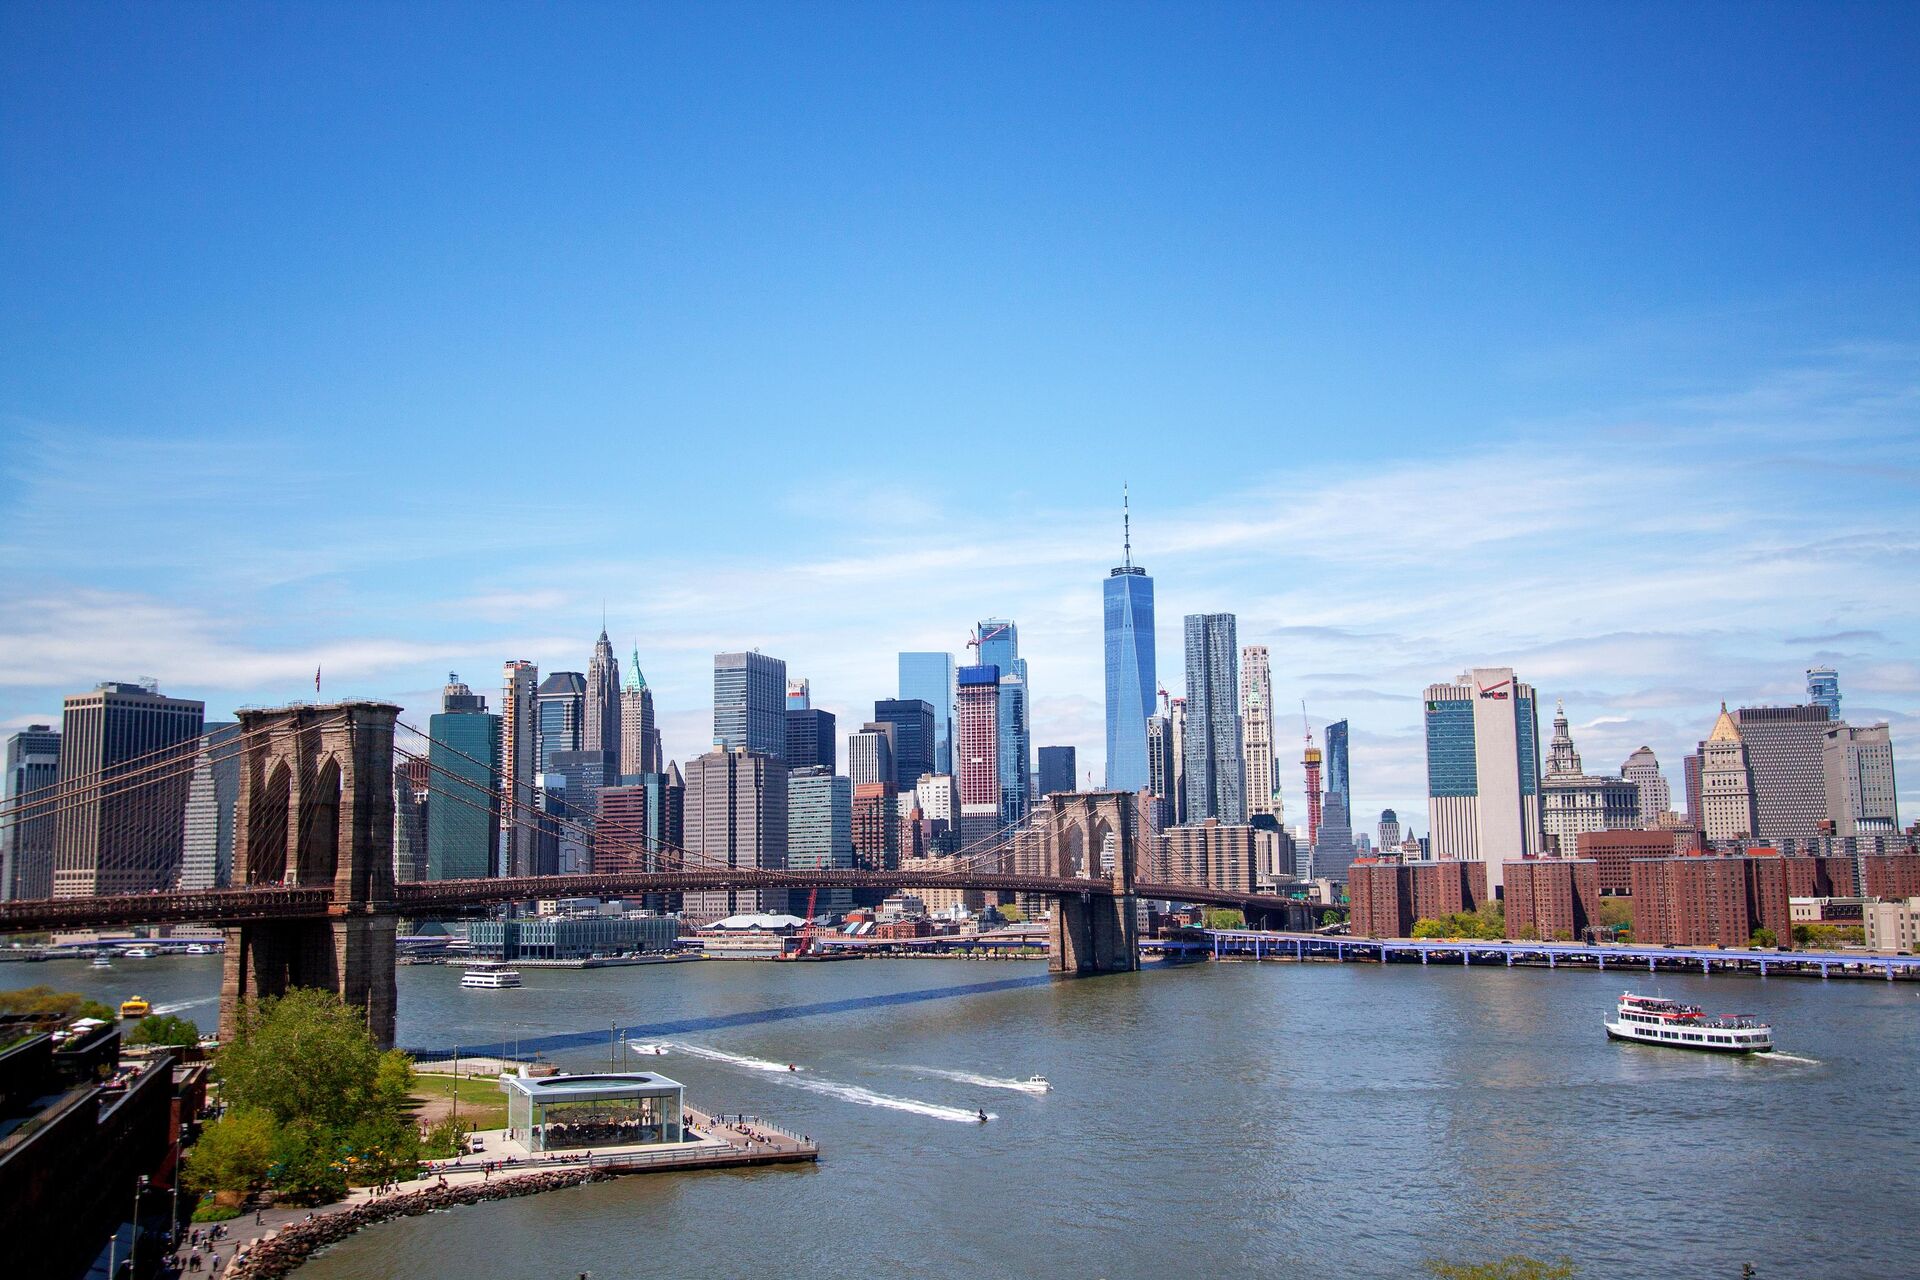 Вид на Бруклинский мост соединяющий районы Нью-Йорка Манхэттен и Бруклин - РИА Новости, 1920, 23.04.2021